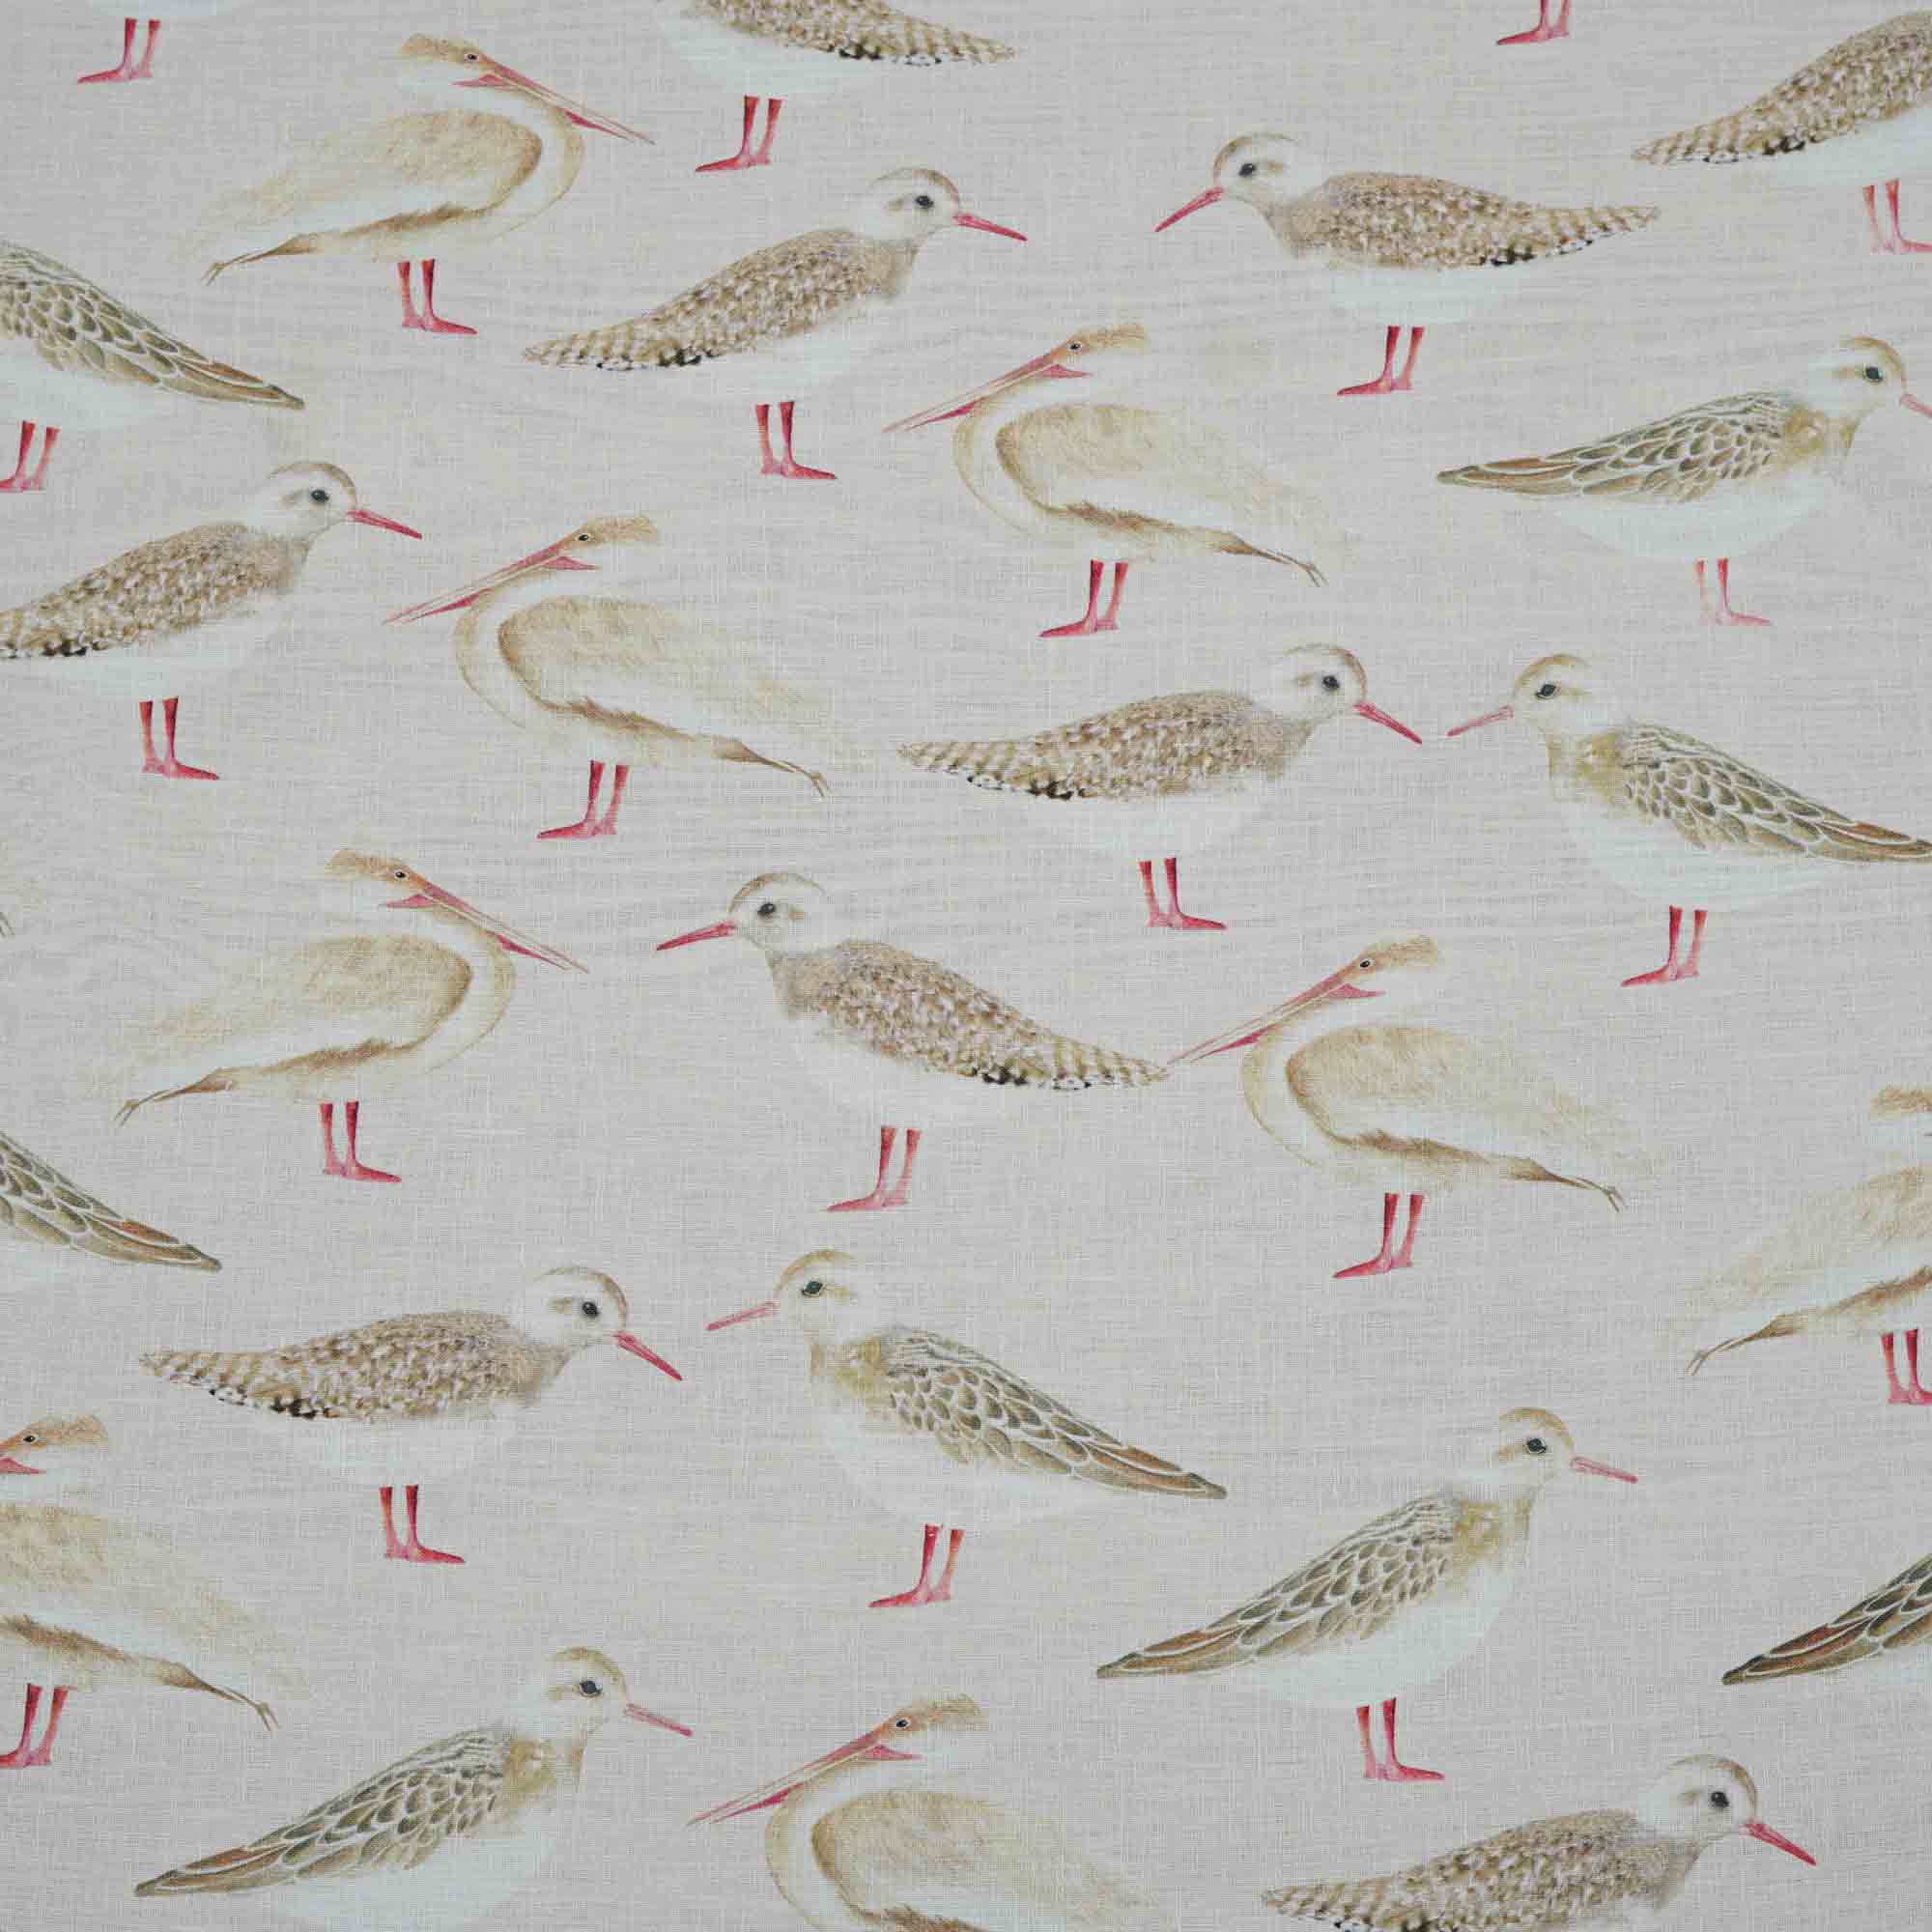 100% Linen Seagulls of Virgin Islands Shore Fabric (Horizontal Repeat)